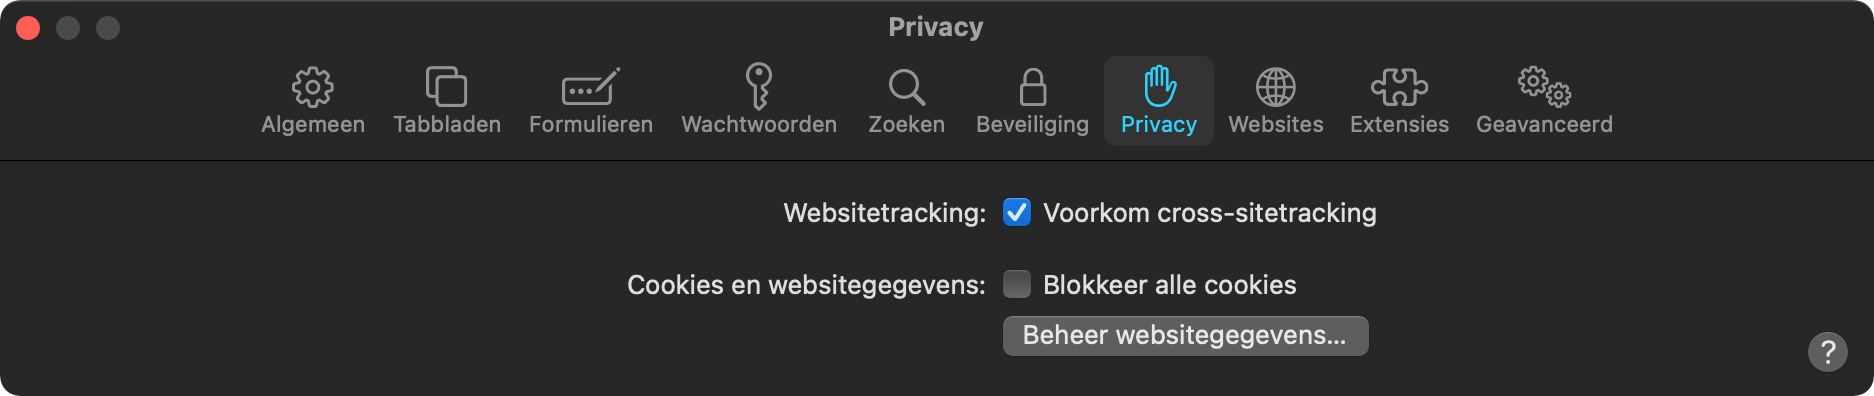 Klik op het tabje 'Privacy' en dan op 'Beheer websitegegevens'.